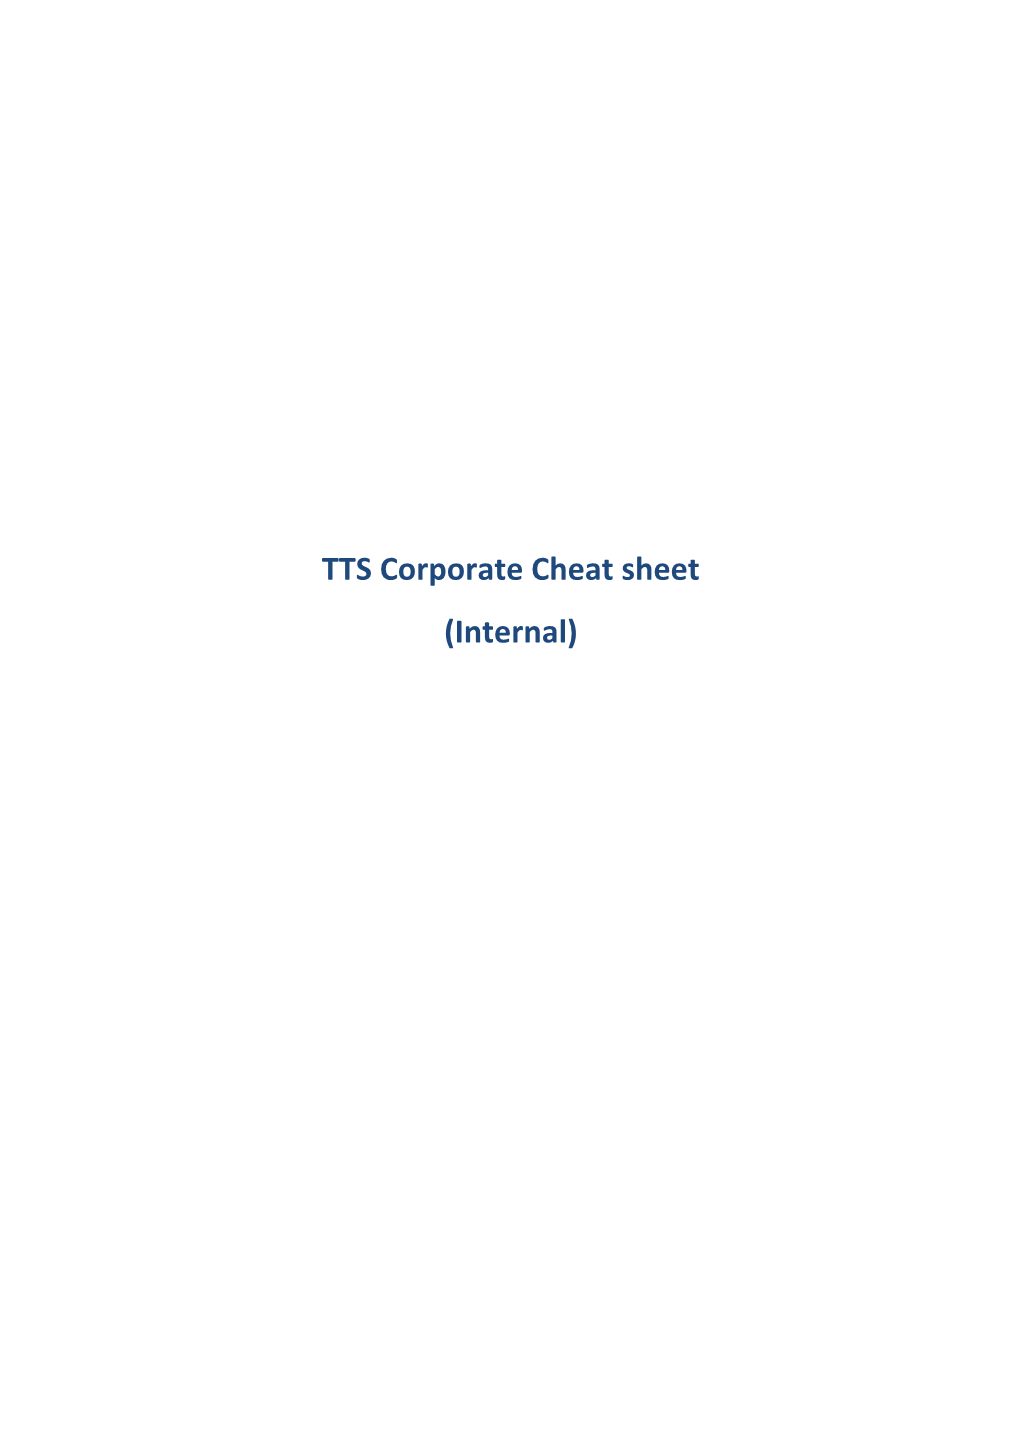 TTS Corporate Cheat Sheet